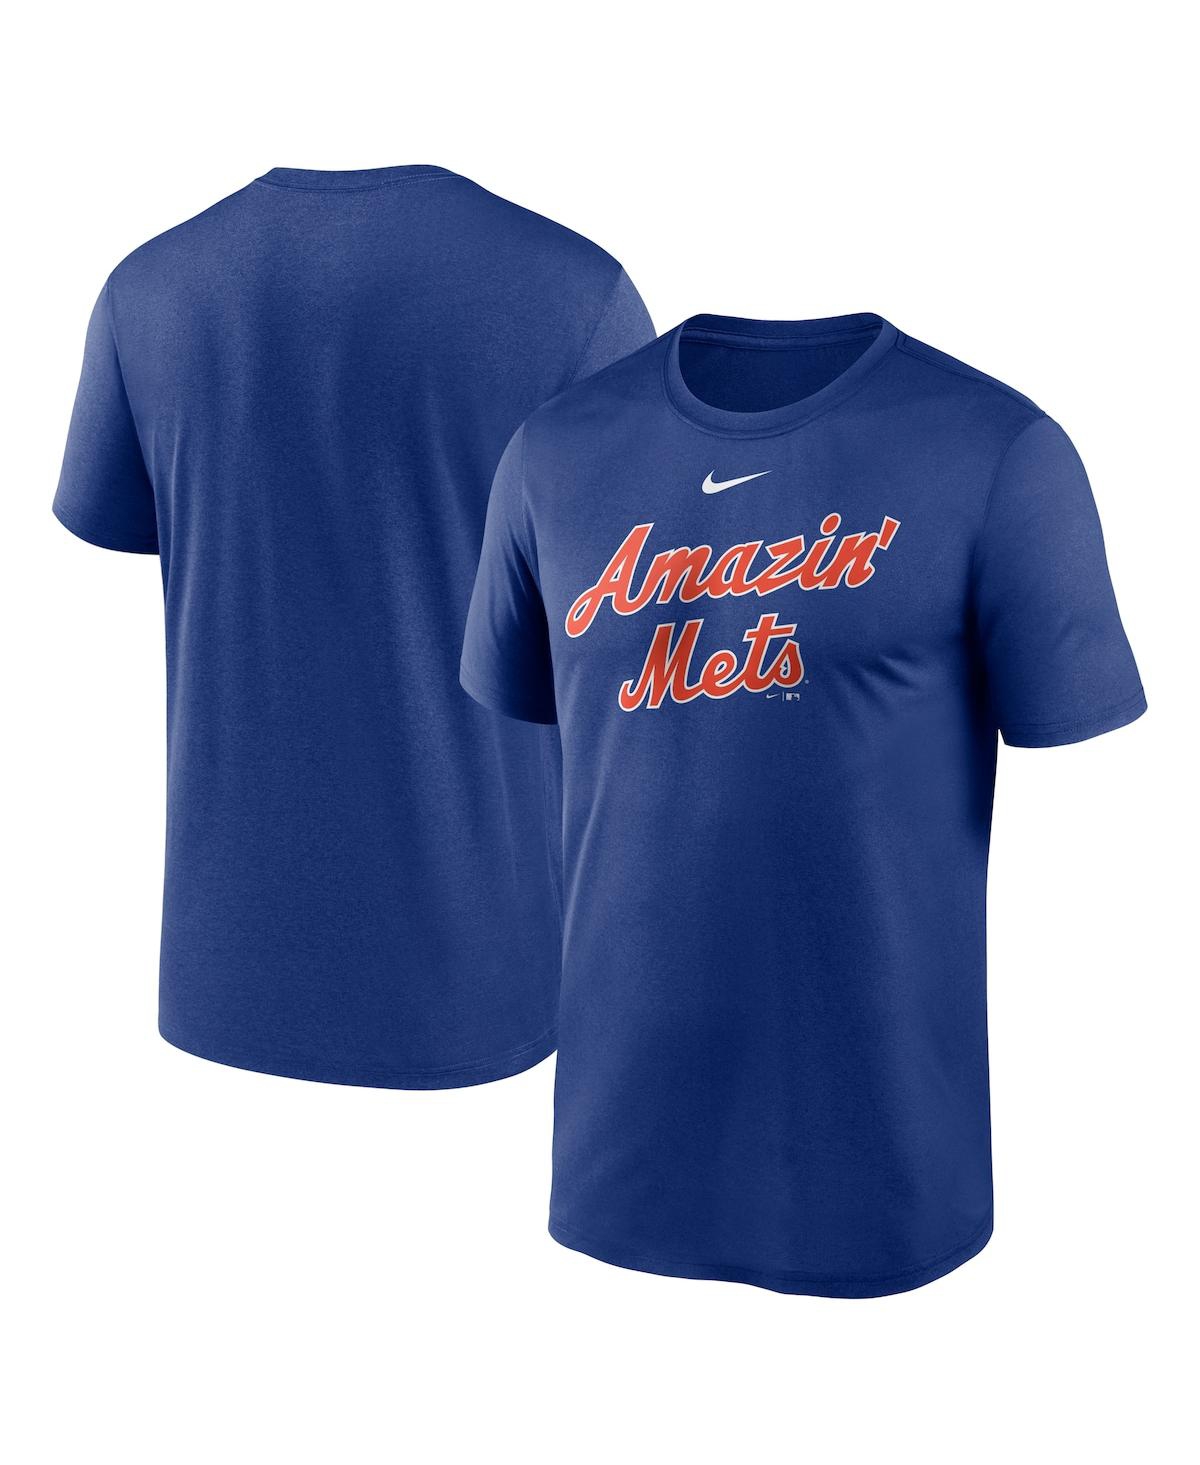 Men's Nike Royal New York Mets Local Club T-shirt